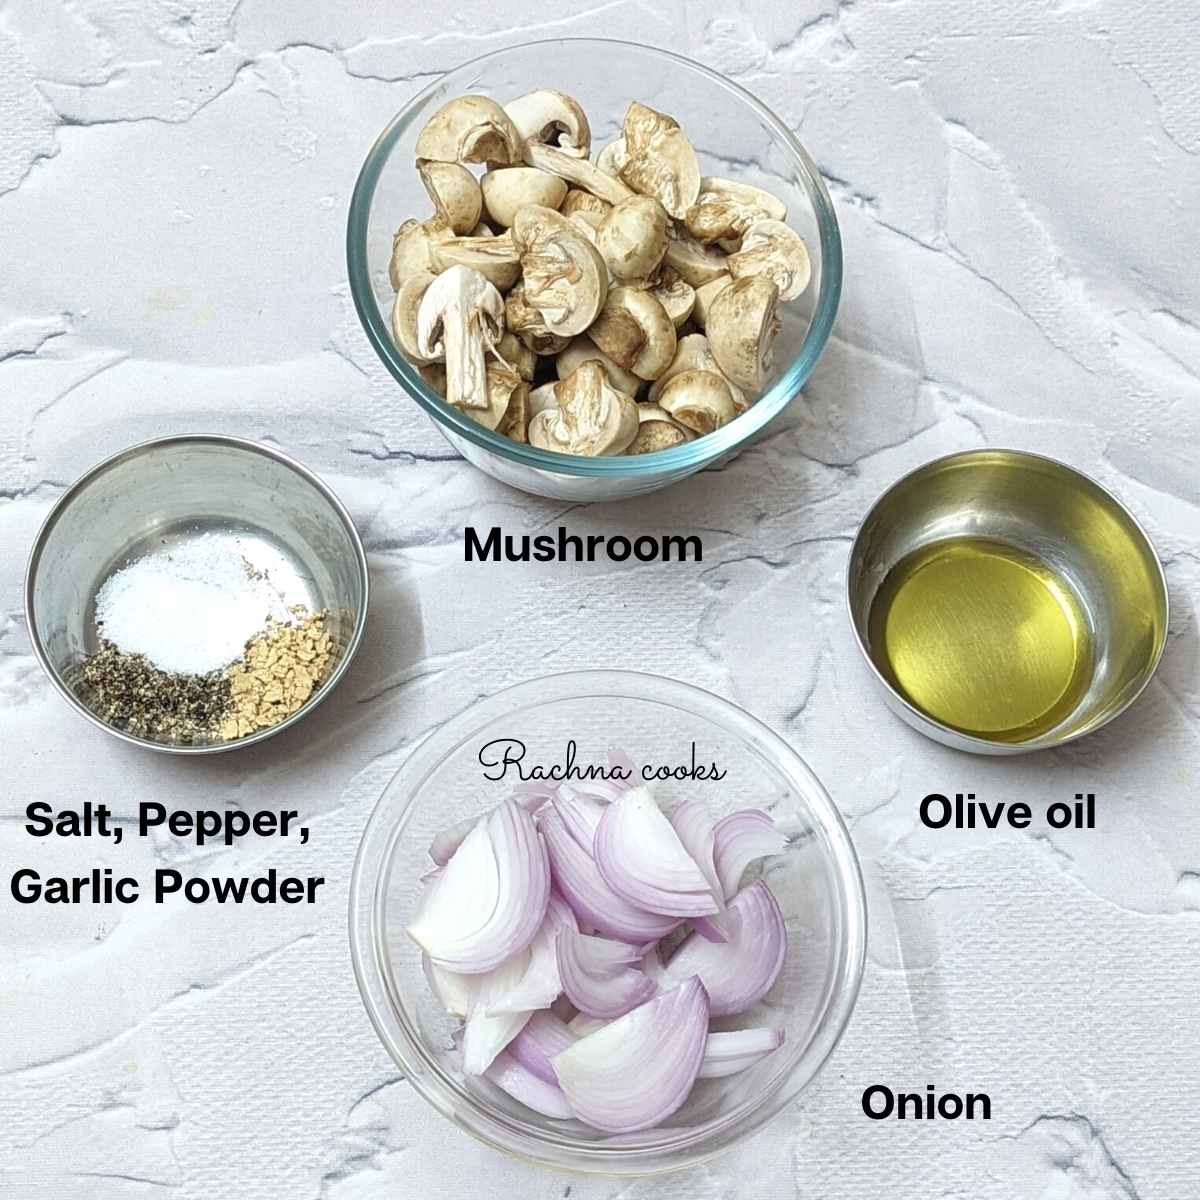 Ingredients for air fryer mushroom on a board: chopped mushrooms, sliced onion, olive oil, salt, pepper and garlic powder.